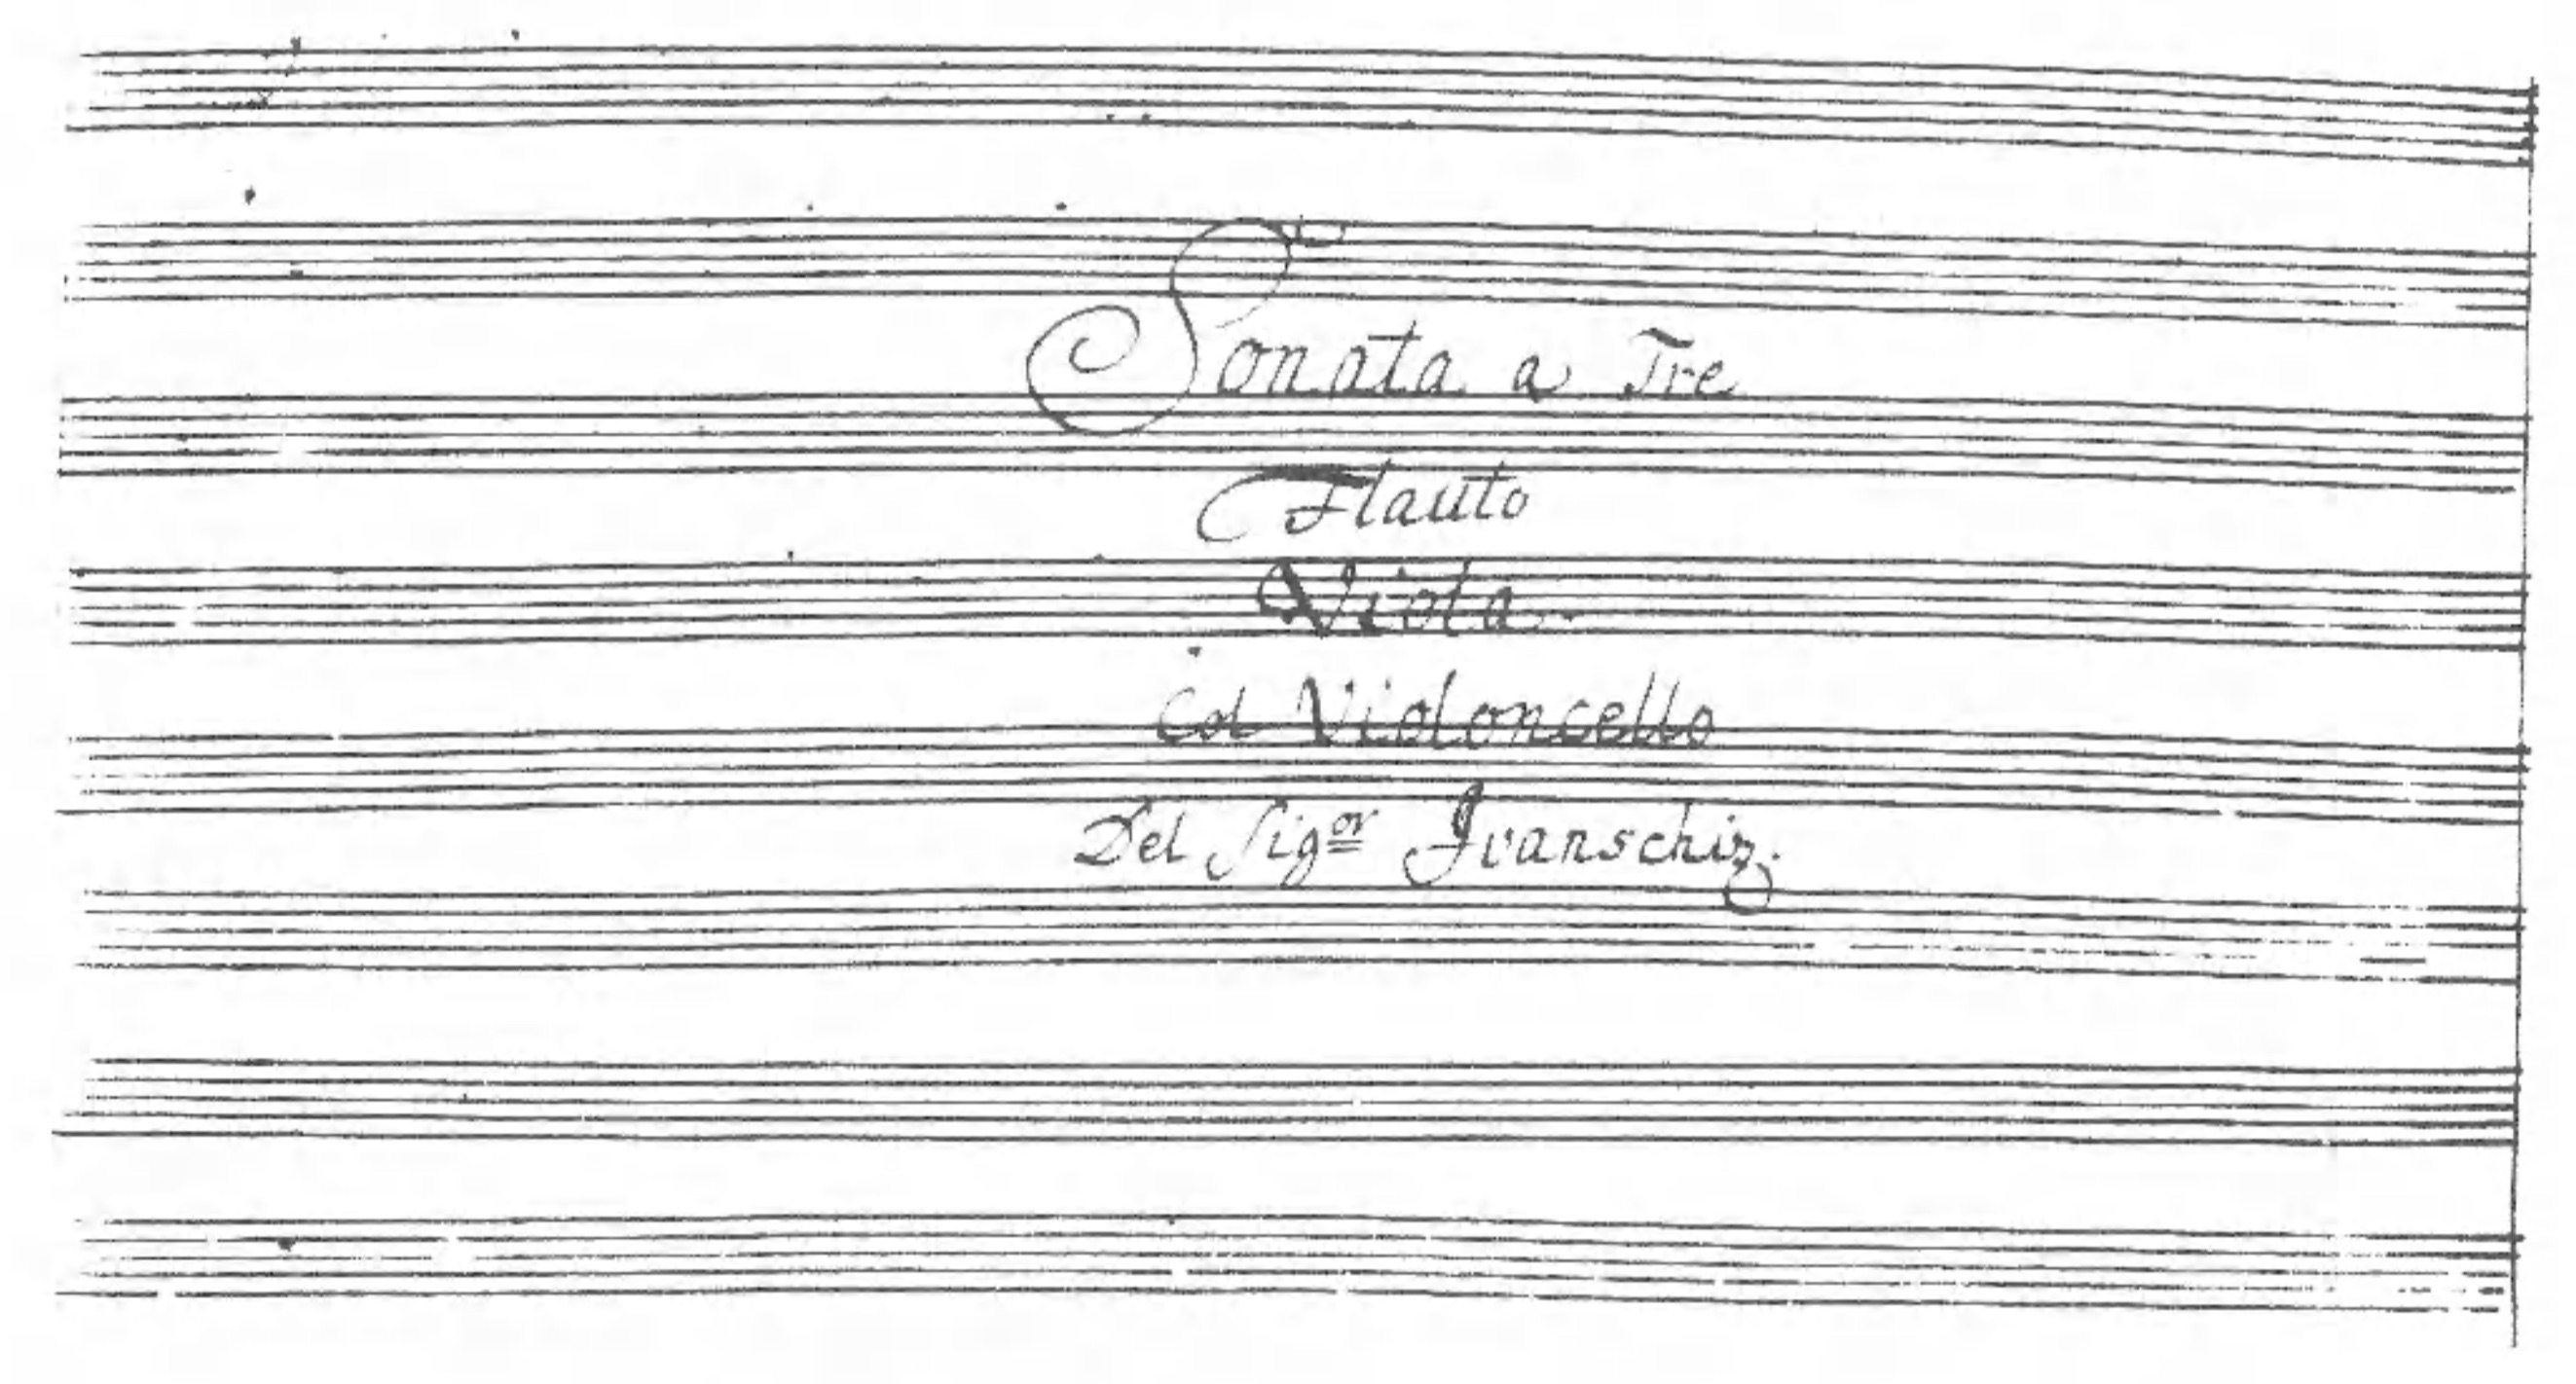 Naslovna stran Sonate a tre v G duru (IV). Badische Landesbibliothek Karlsruhe, Ms. 225.